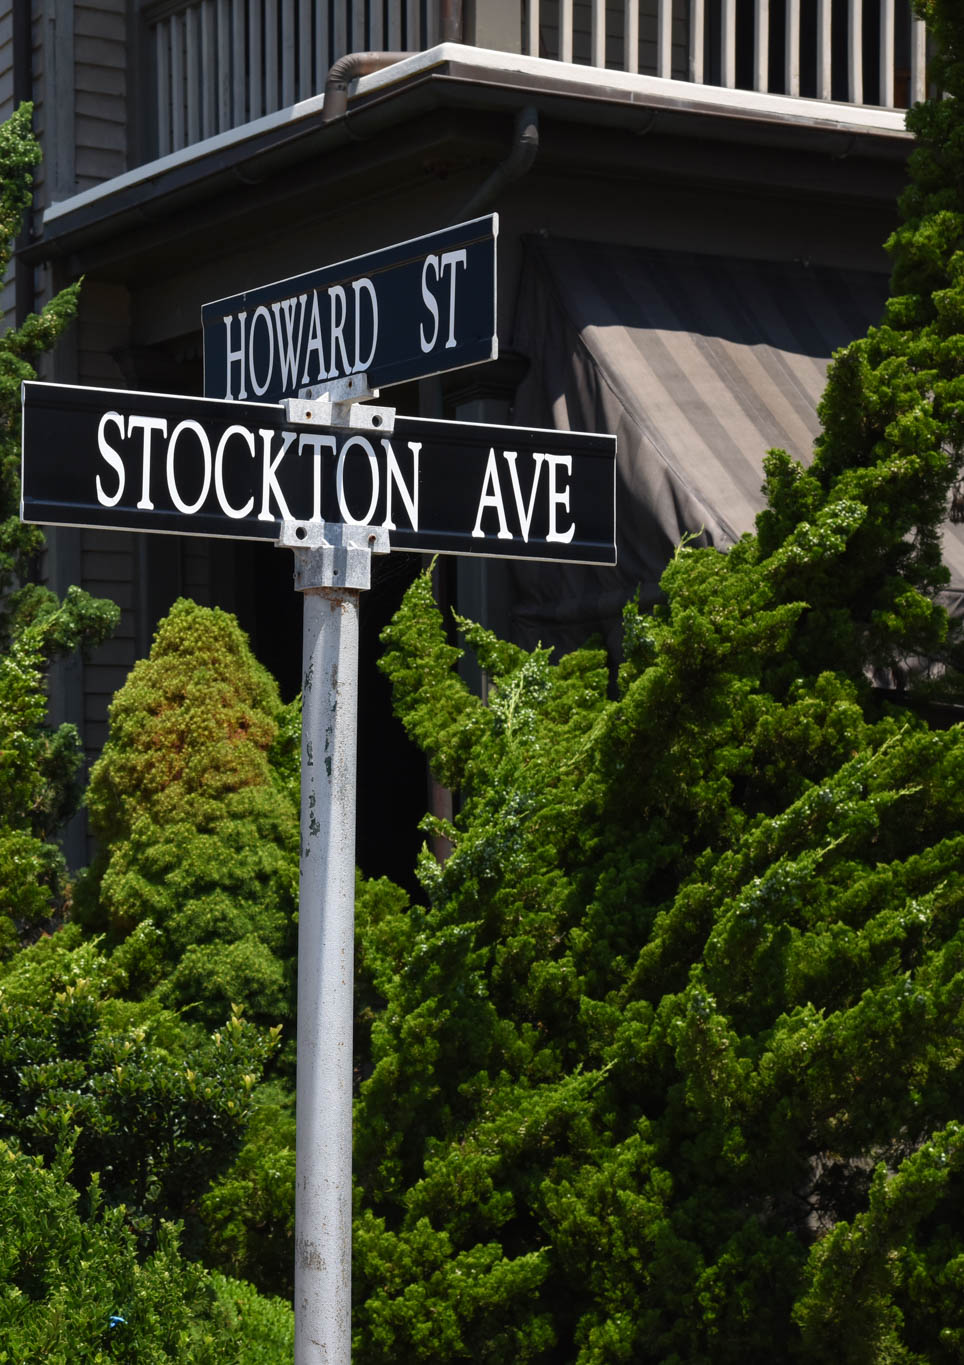 Street signs of Howard St & Stockton Ave